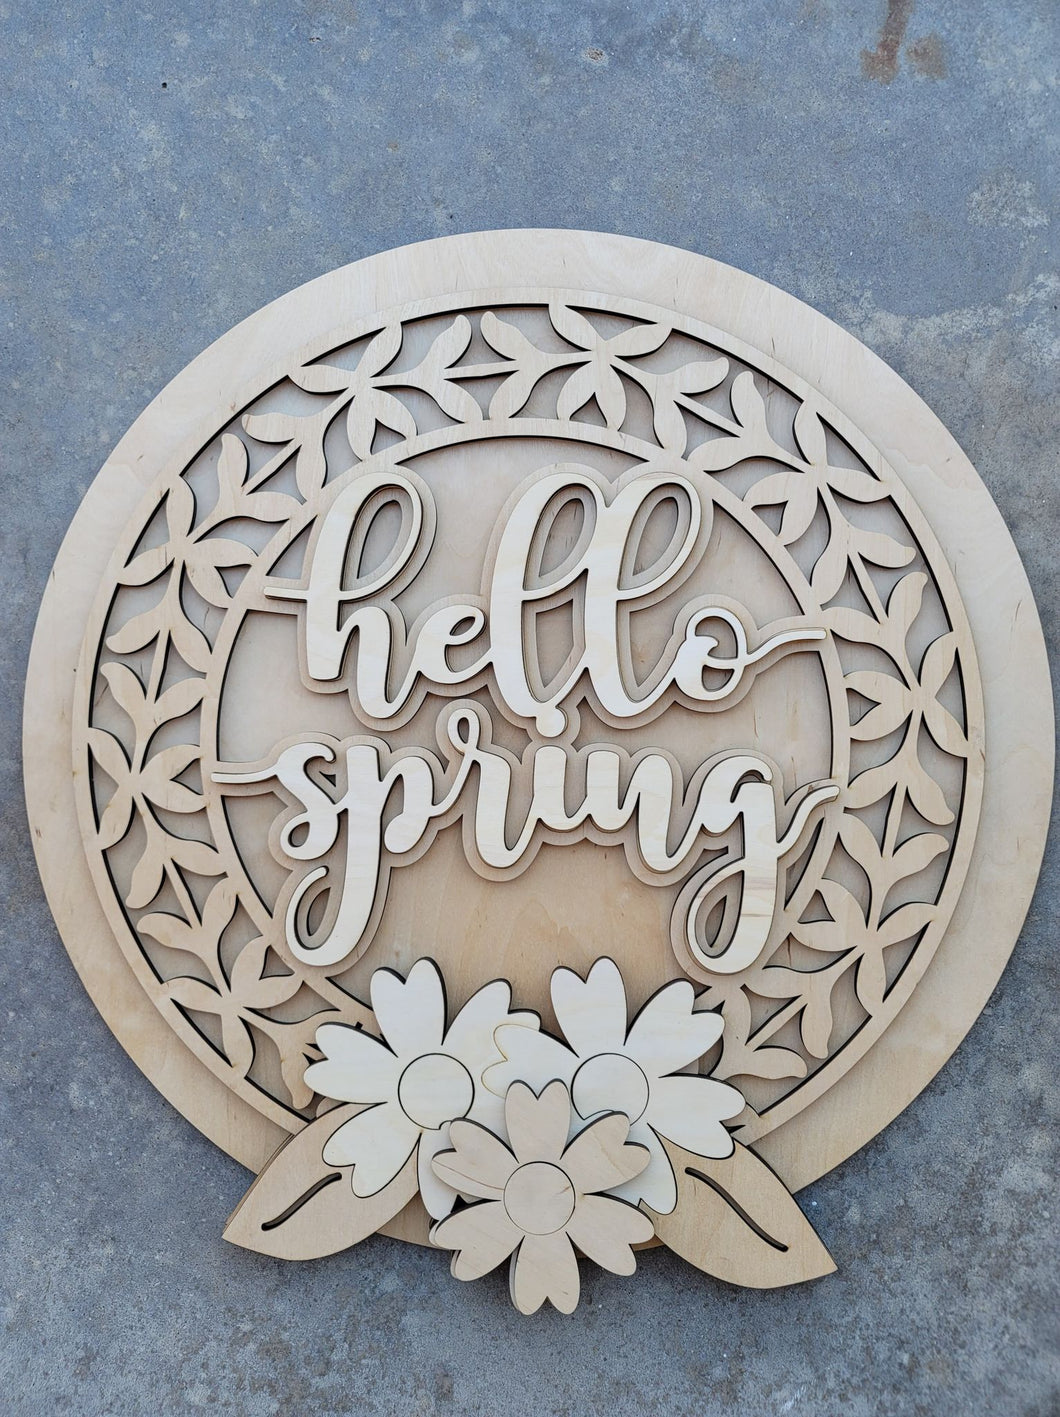 Hello Spring, Spring Decor, Spring Doorhanger, Easter, Welcome Door Hanger, Porch Sitter, All Season, Front Porch, Farm House, Rustic, DIY Sign